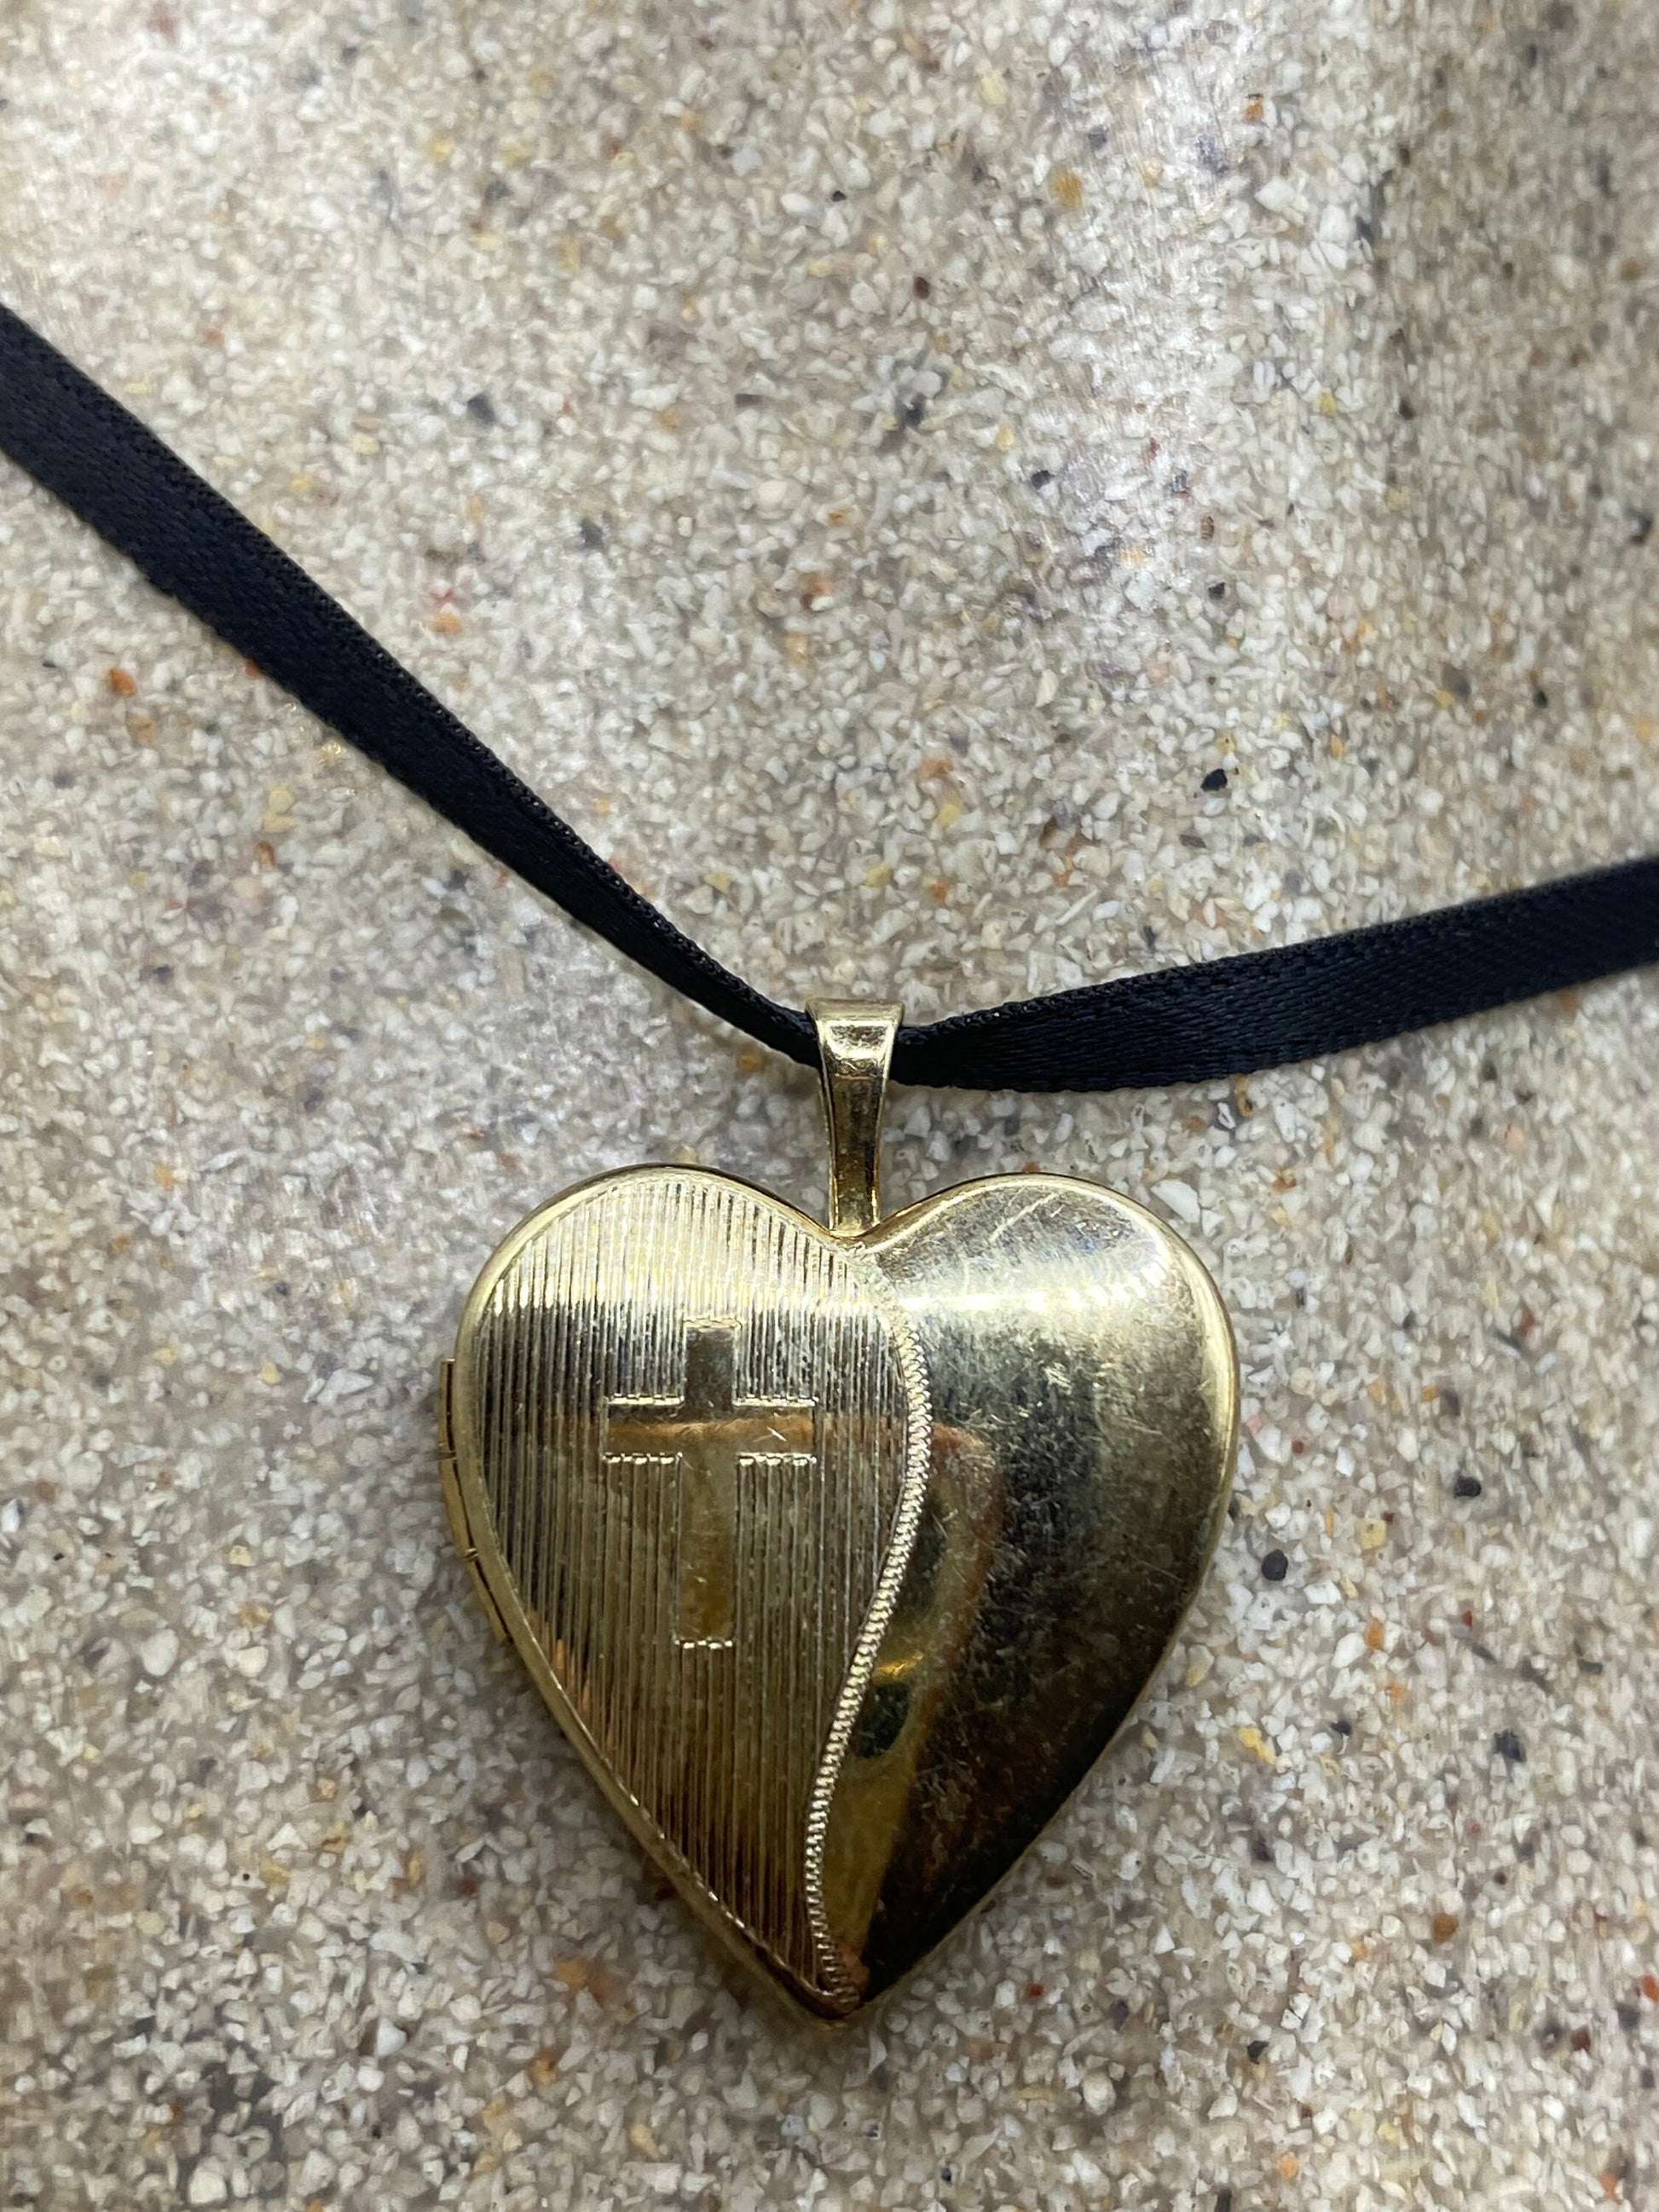 Vintage Gold Locket | Tiny Heart 9k Gold Filled Pendant Photo Memory Charm Engraved Cross | Choker Necklace